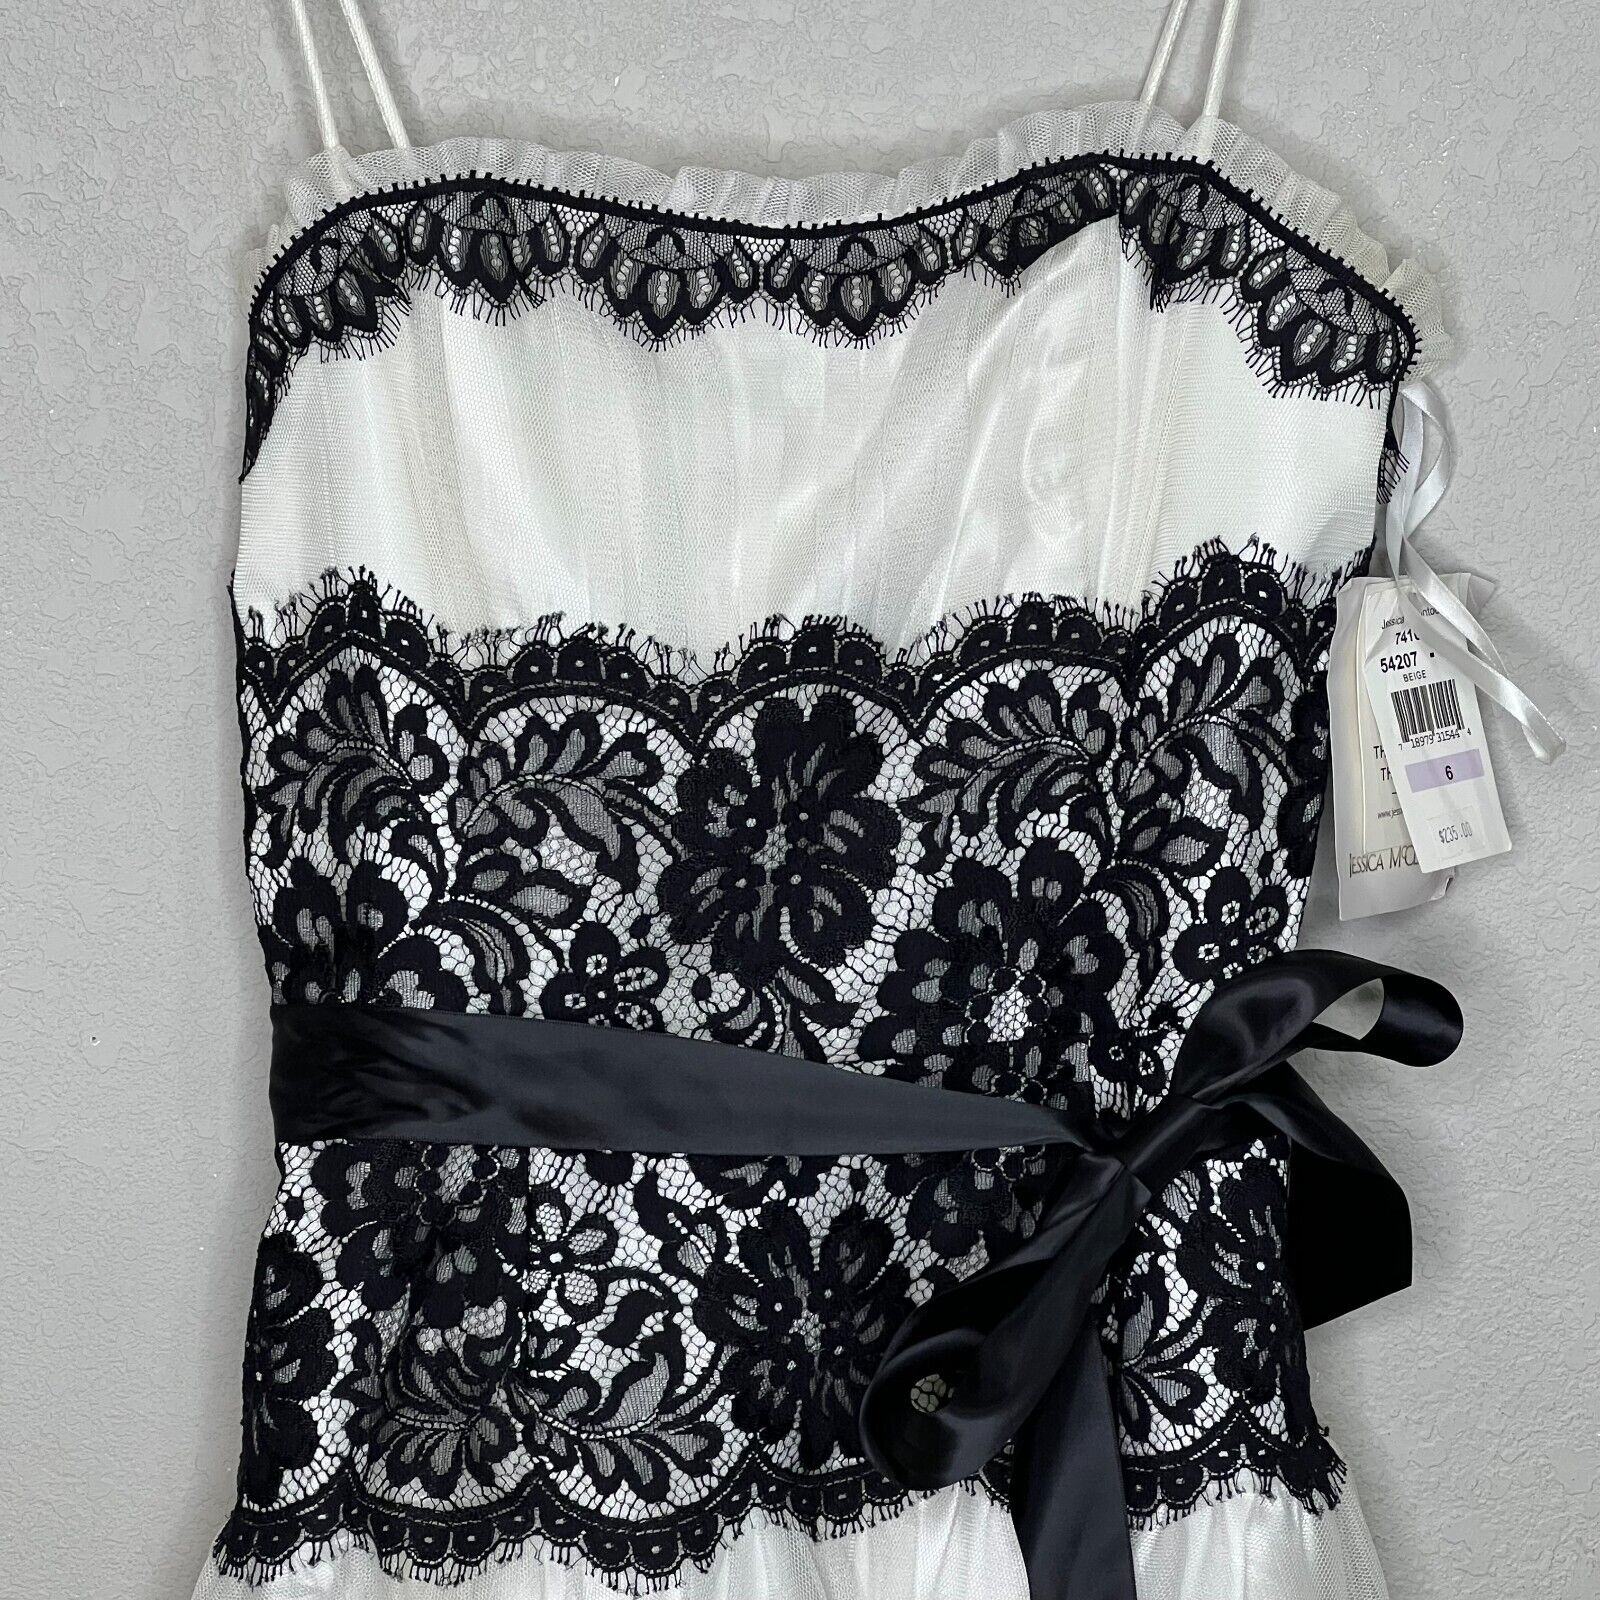 Jessica McClintock Early 2000's White Black Lace Mini Dress 6 / Fits Size XS NEW